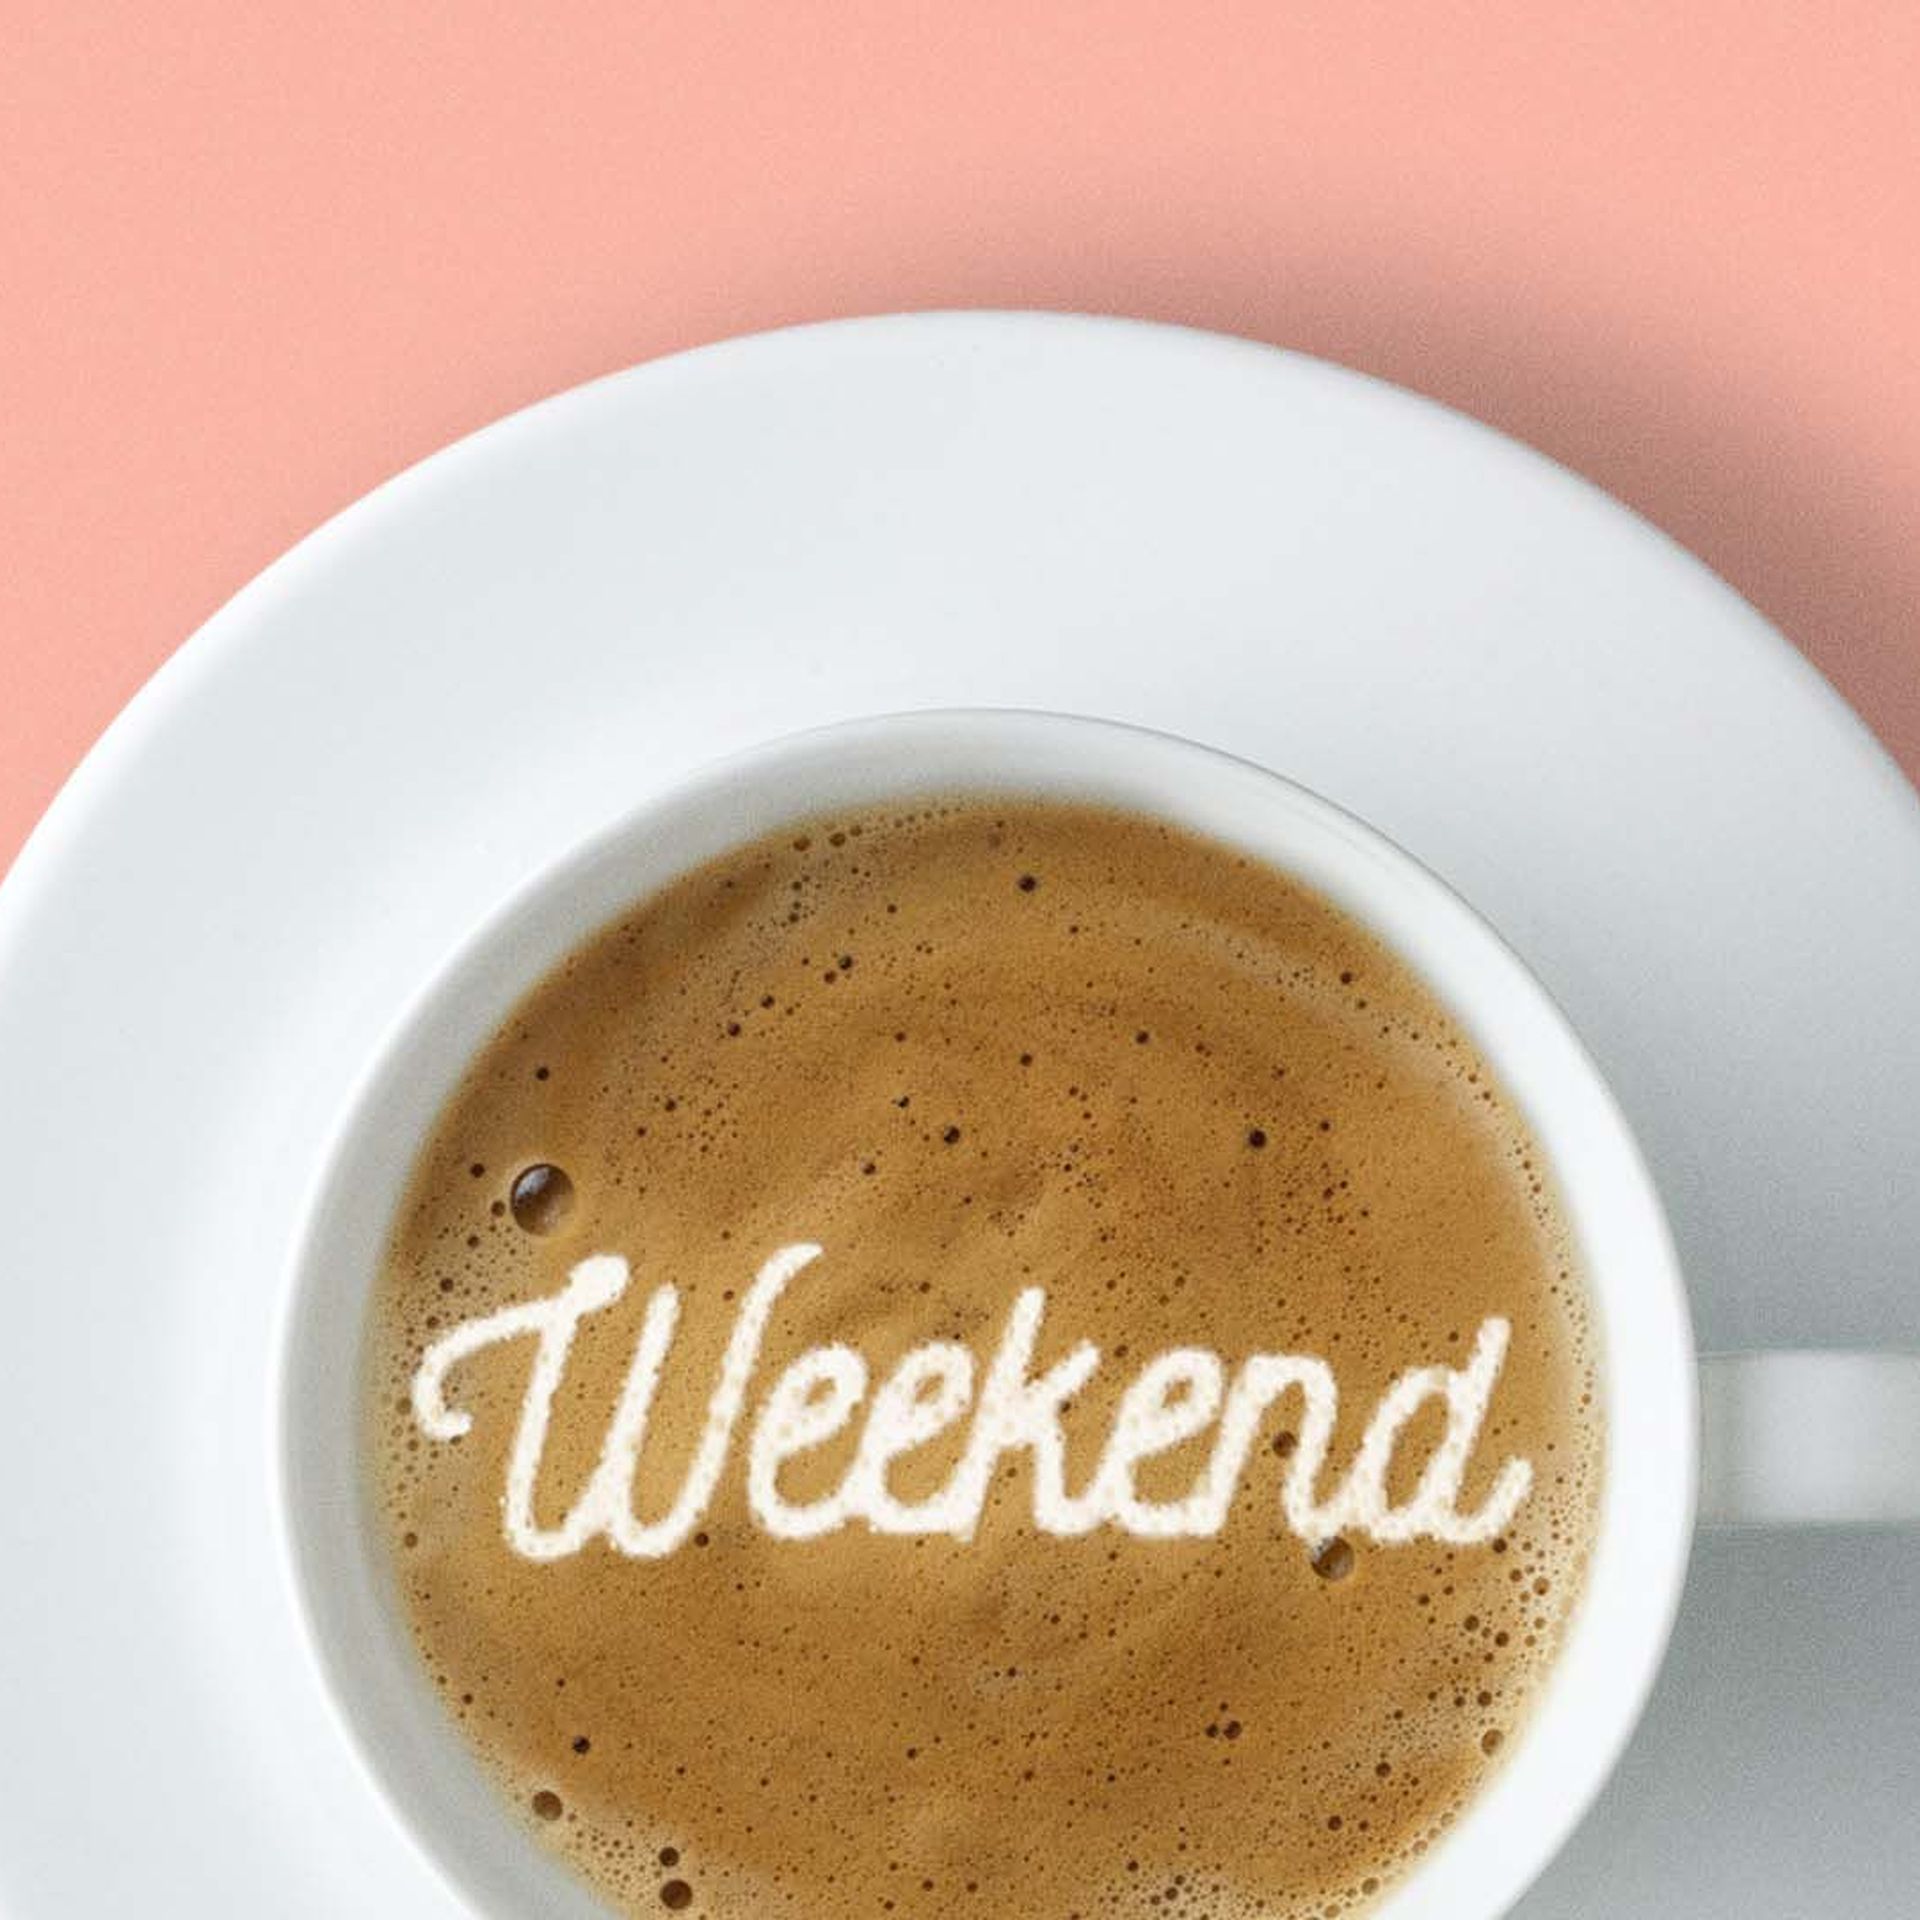 Illustration of a latte with "weekend" written in the foam.